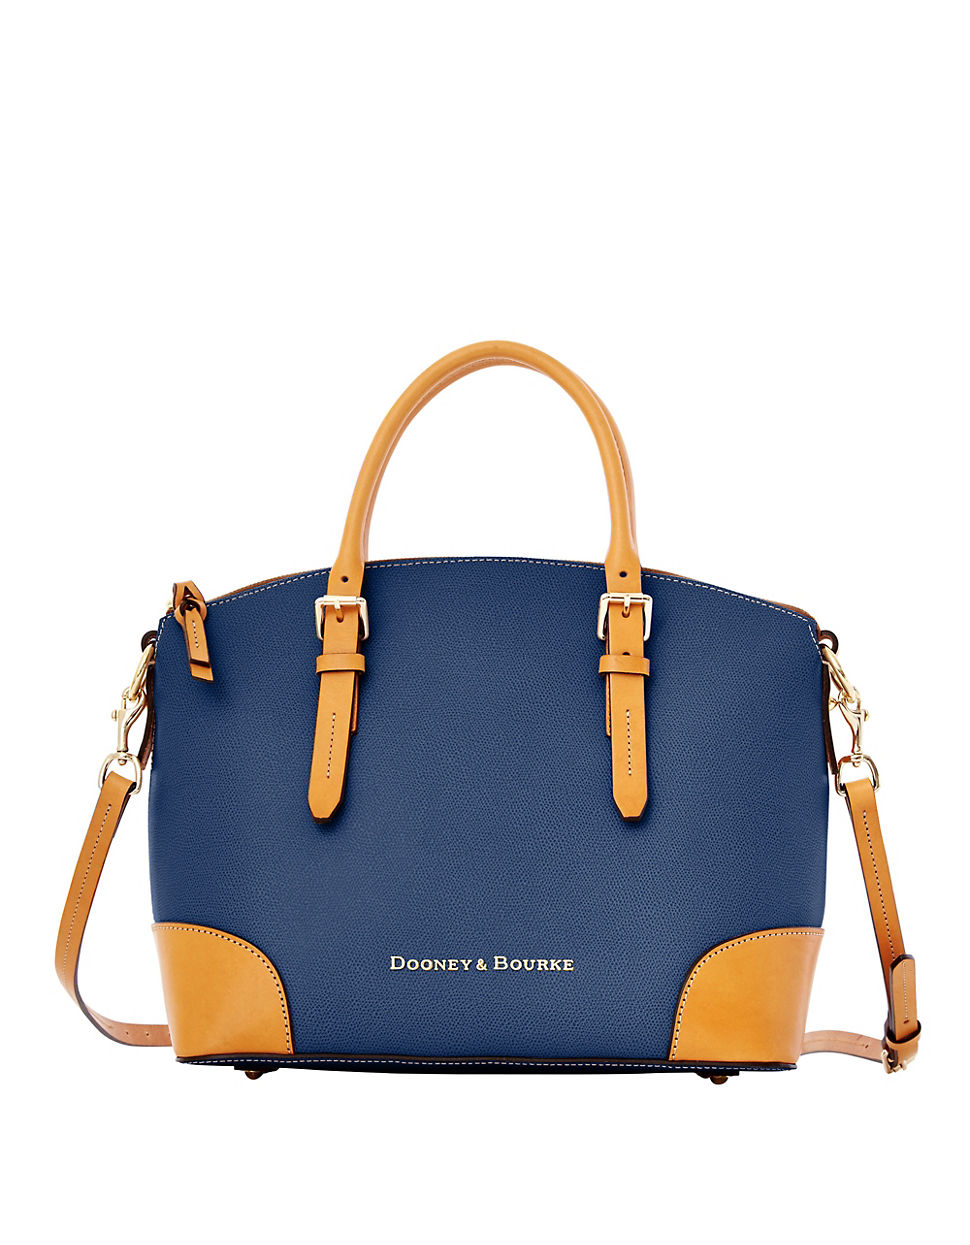 Dooney & bourke Claremont Leather Dome Satchel Bag in Blue | Lyst